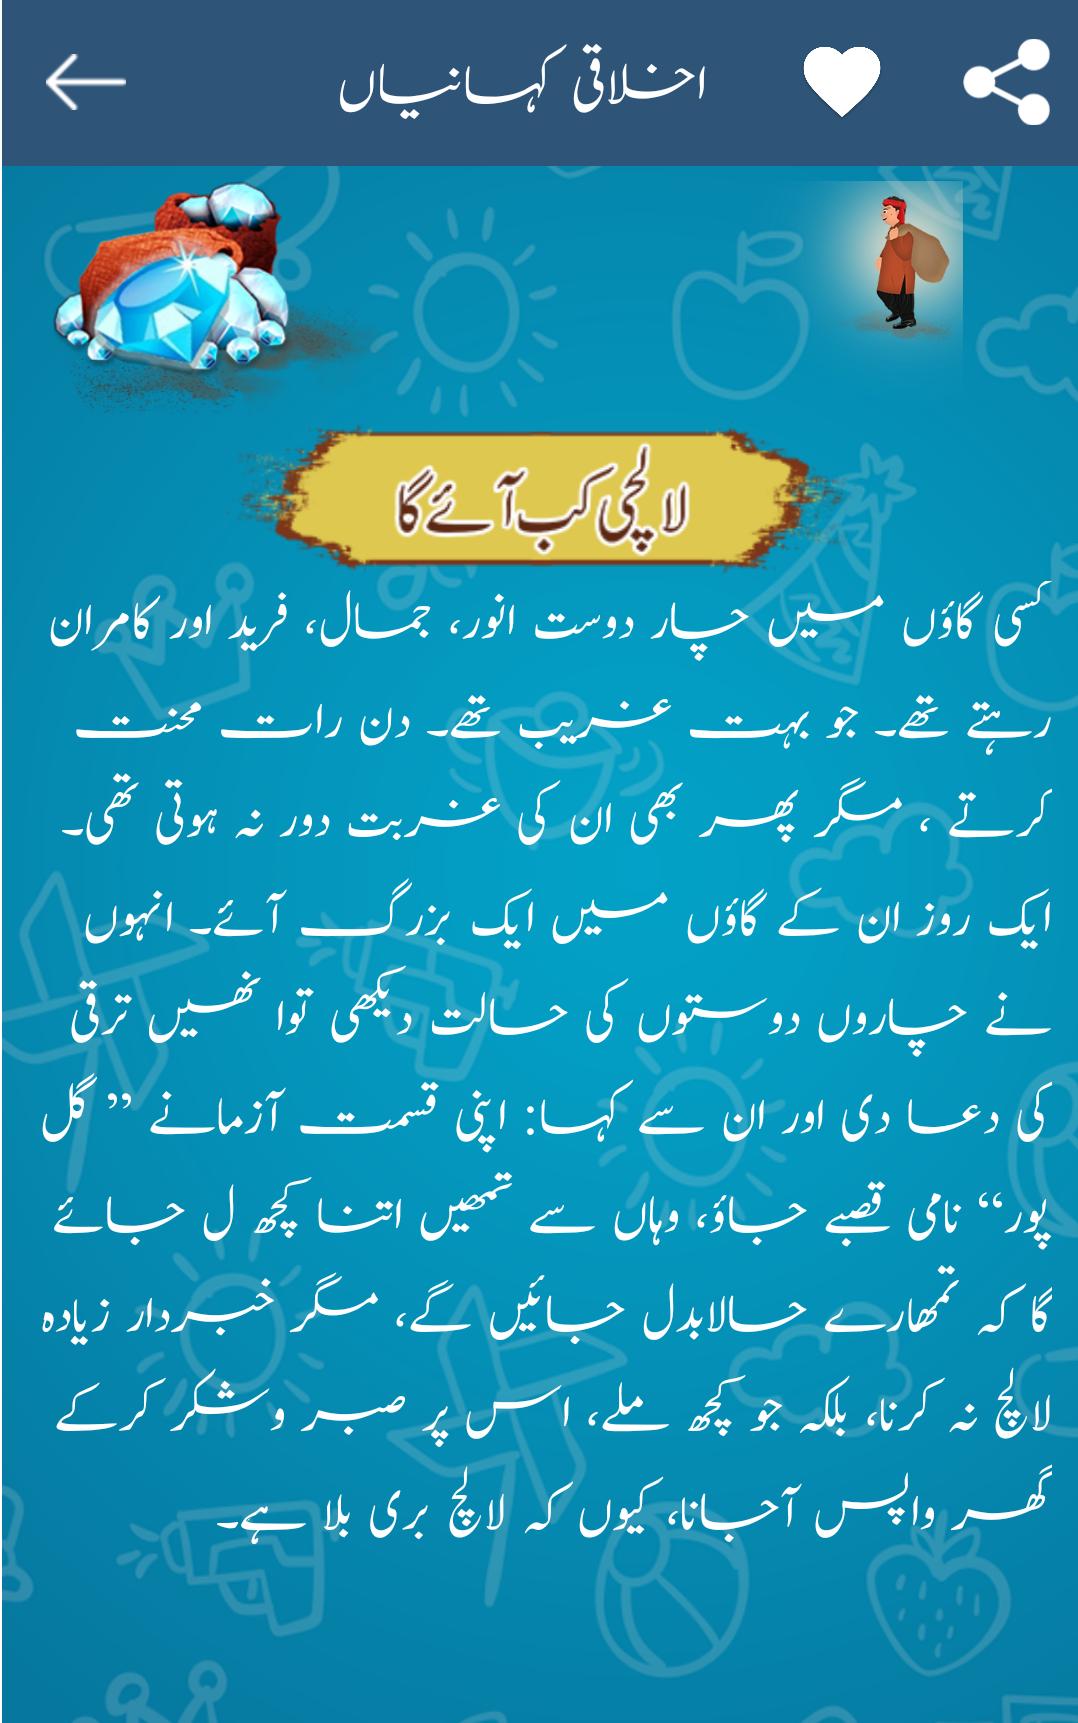 Bachon Ki Kahaniya Moral Stories In Urdu For Android Apk Download 